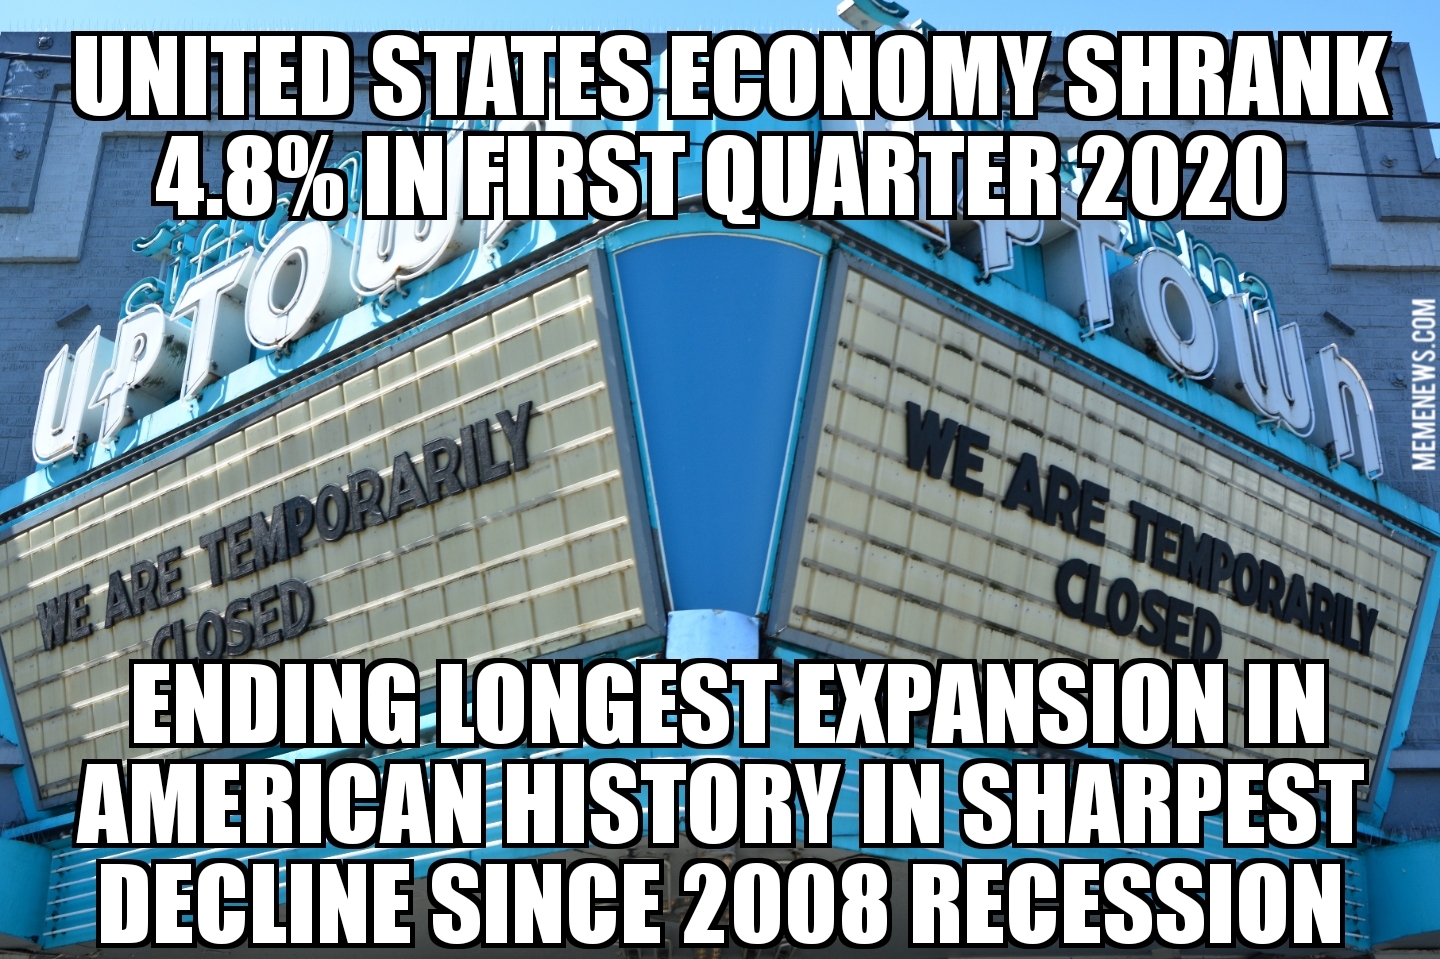 U.S. economy shrank 4.8% in first quarter 2020